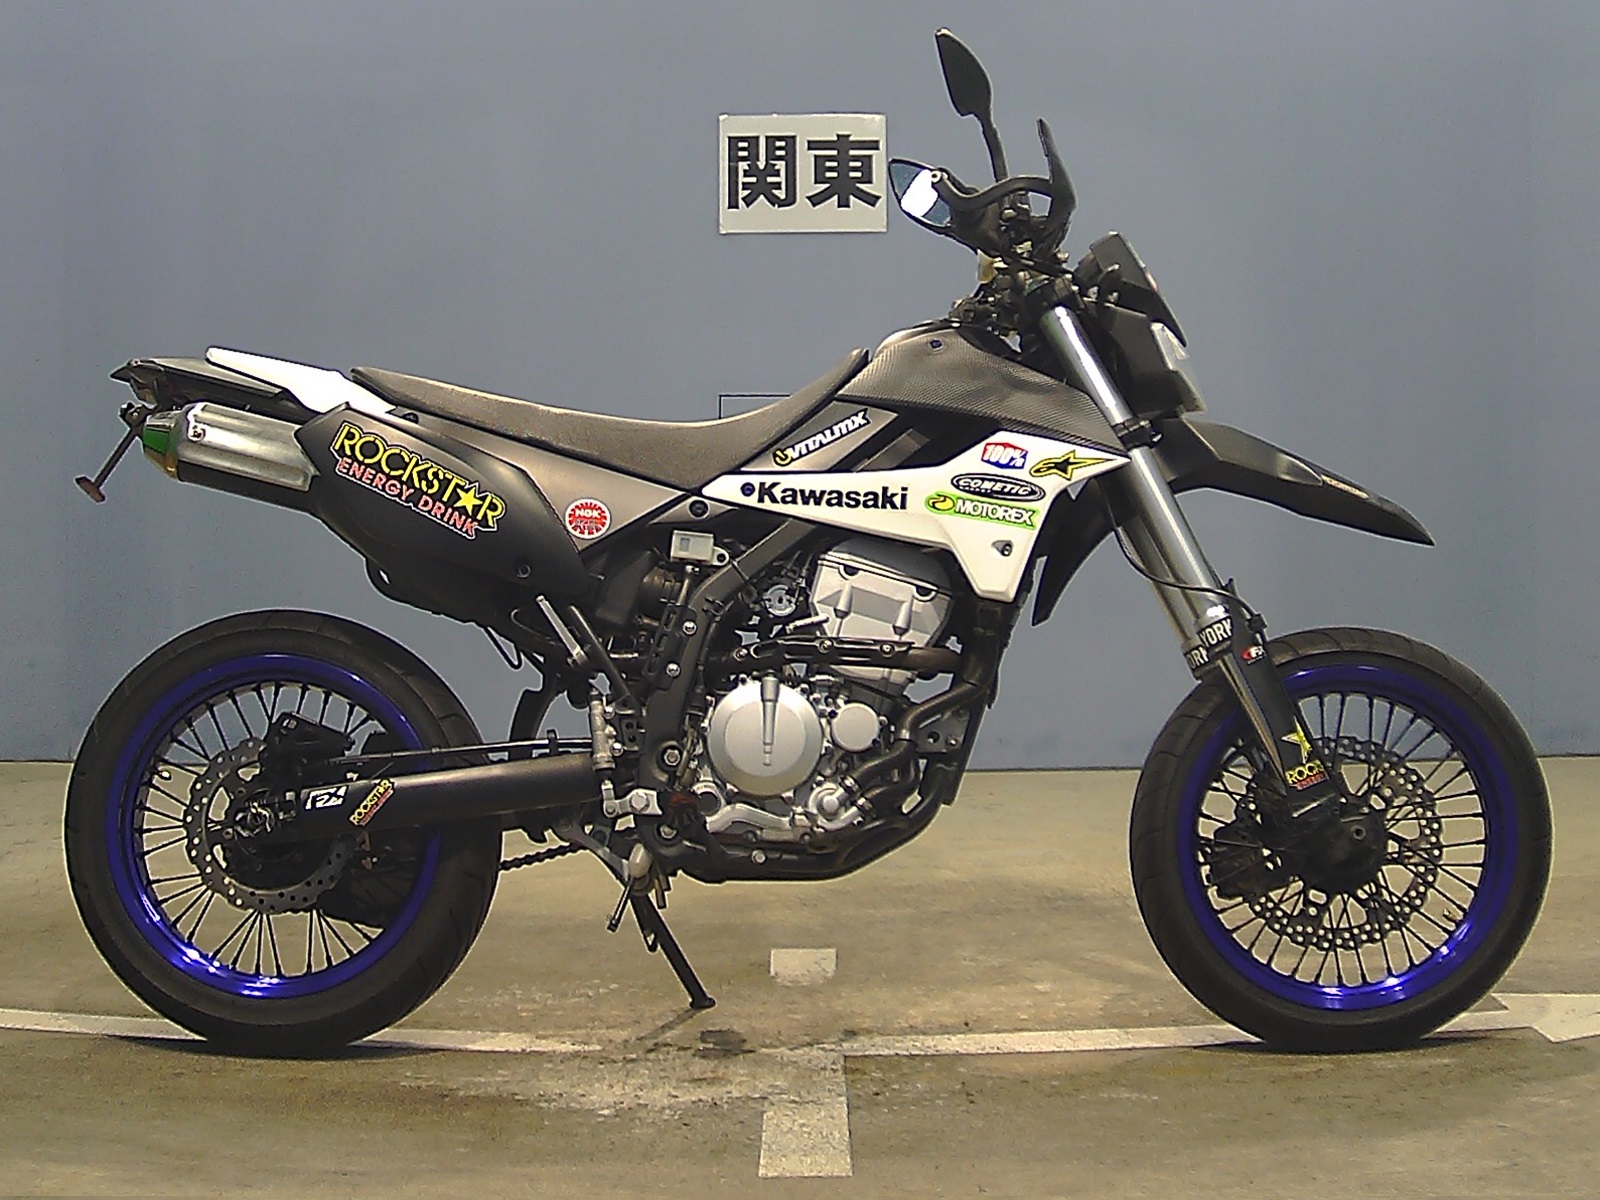 Kawasaki d-tracker 250 (klx 250 sf) — мотоэнциклопедия